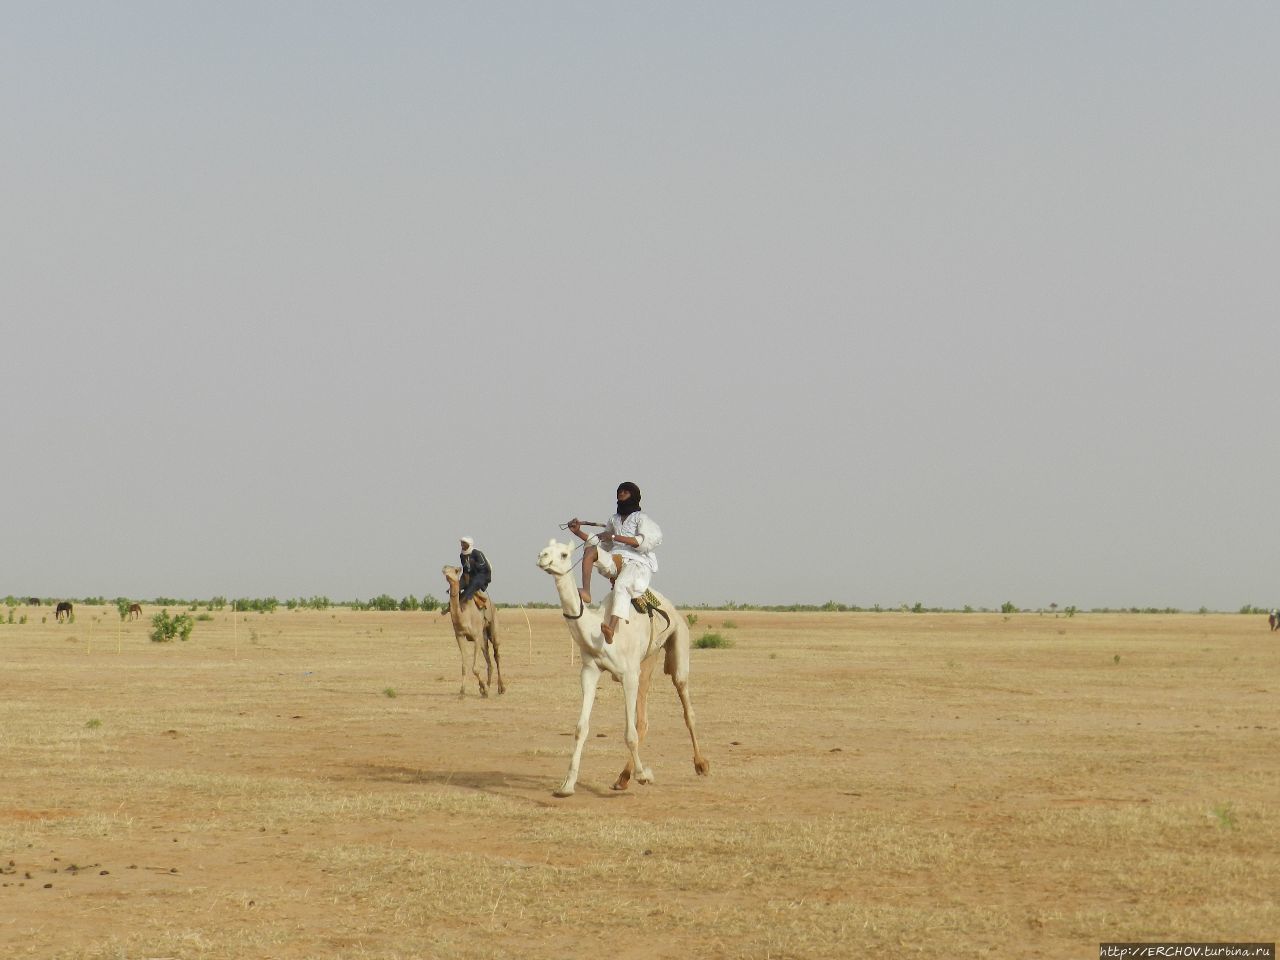 Нигер. Ч — 15. Скачки. Дорога в Агадес Департамент Агадес, Нигер